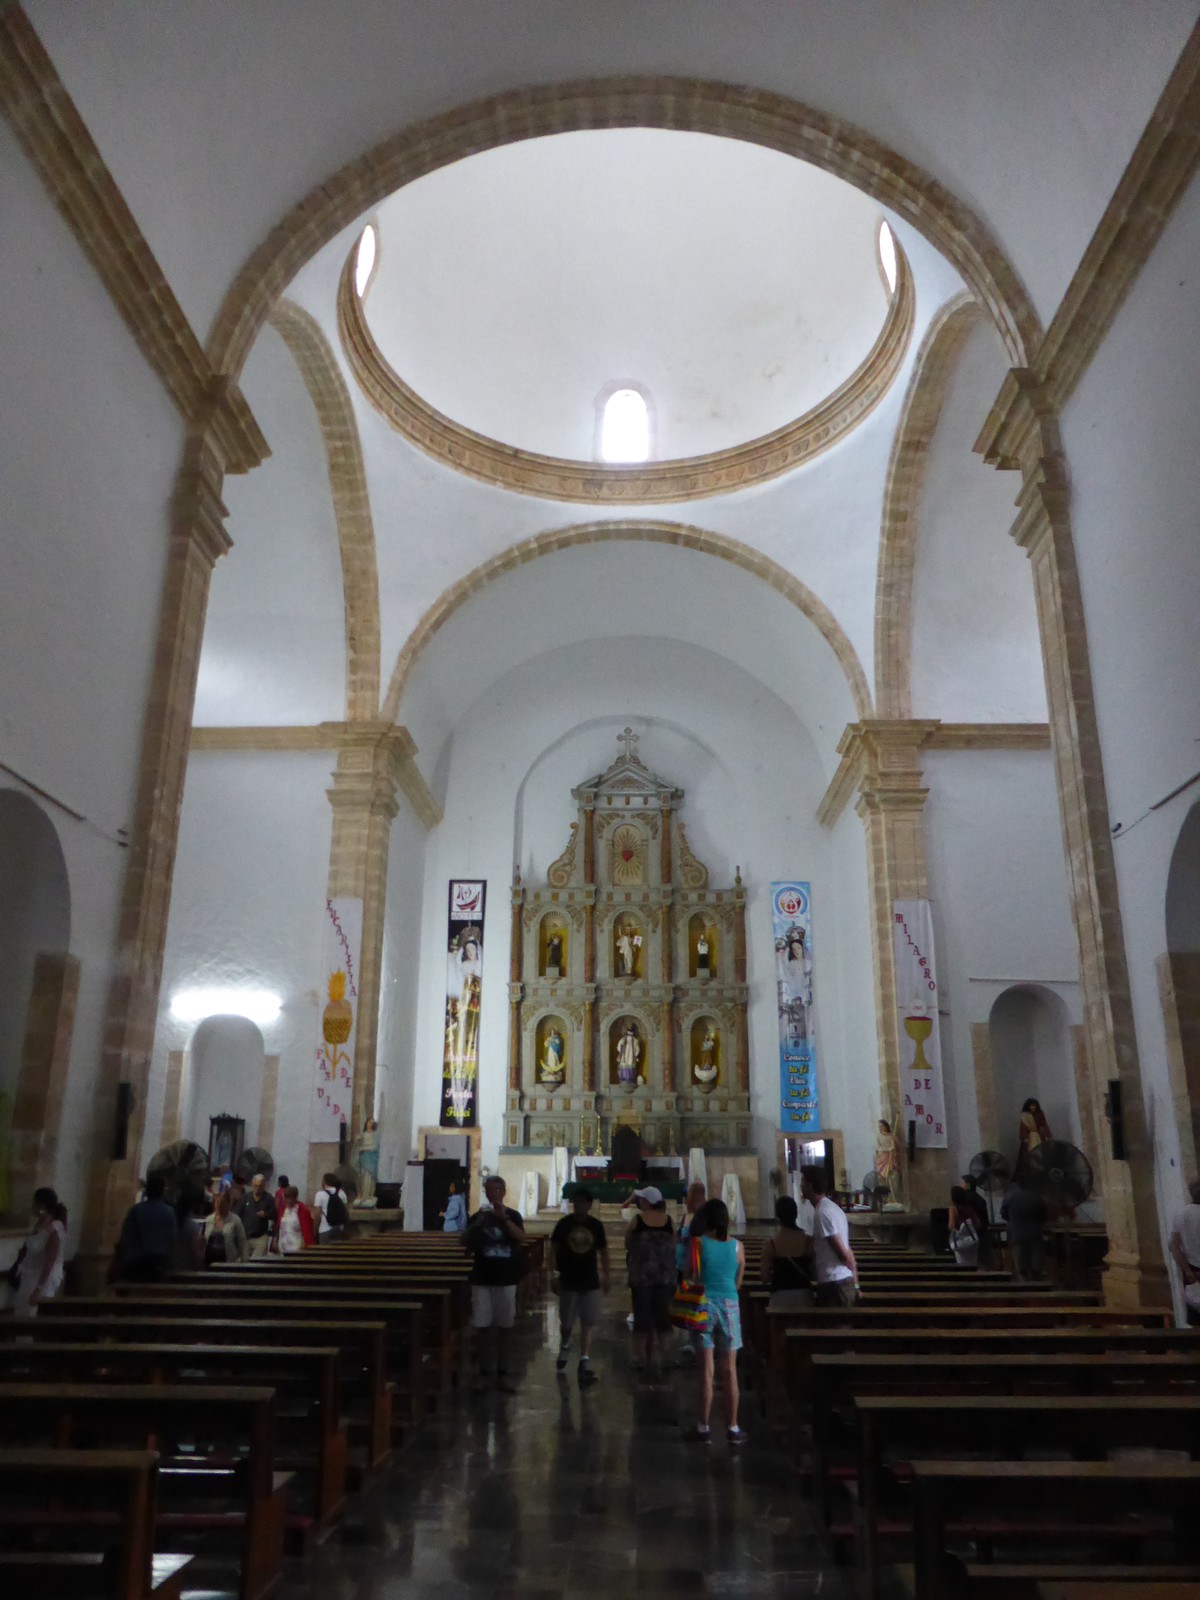 Inside the Cathedral de San Gervasio